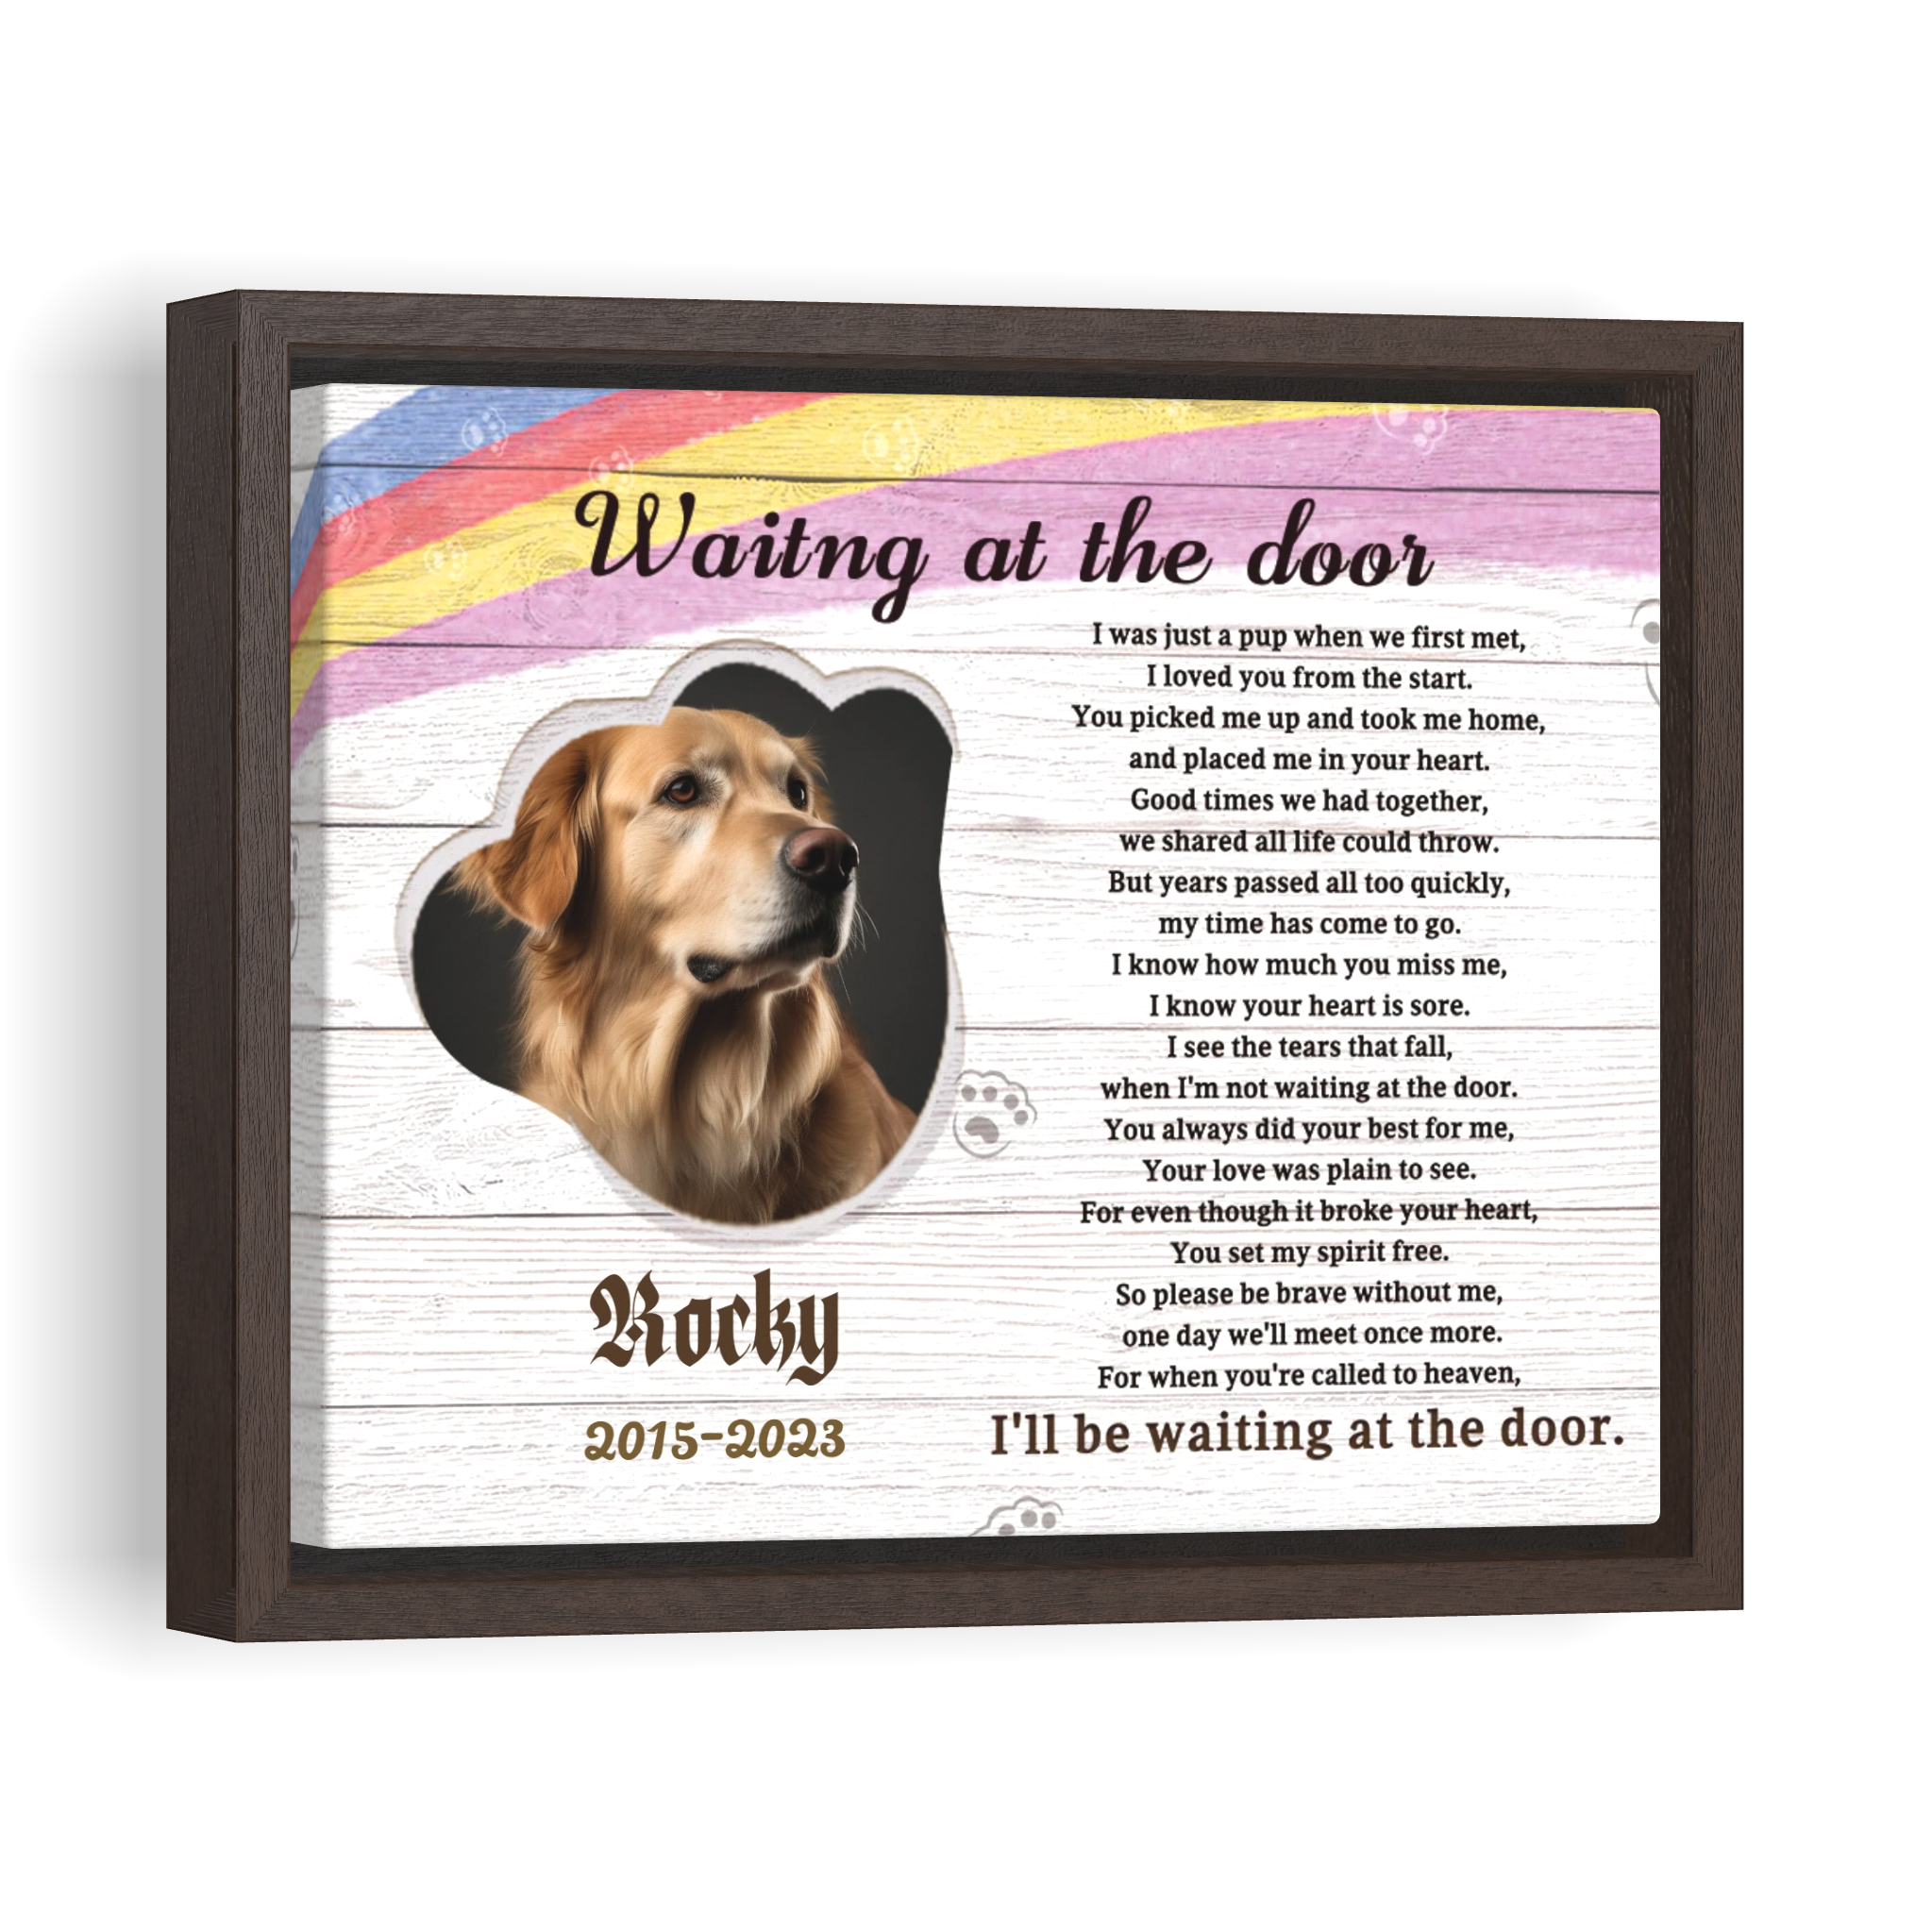 Waiting at the door - Personalized Canvas Print Pet Memorial